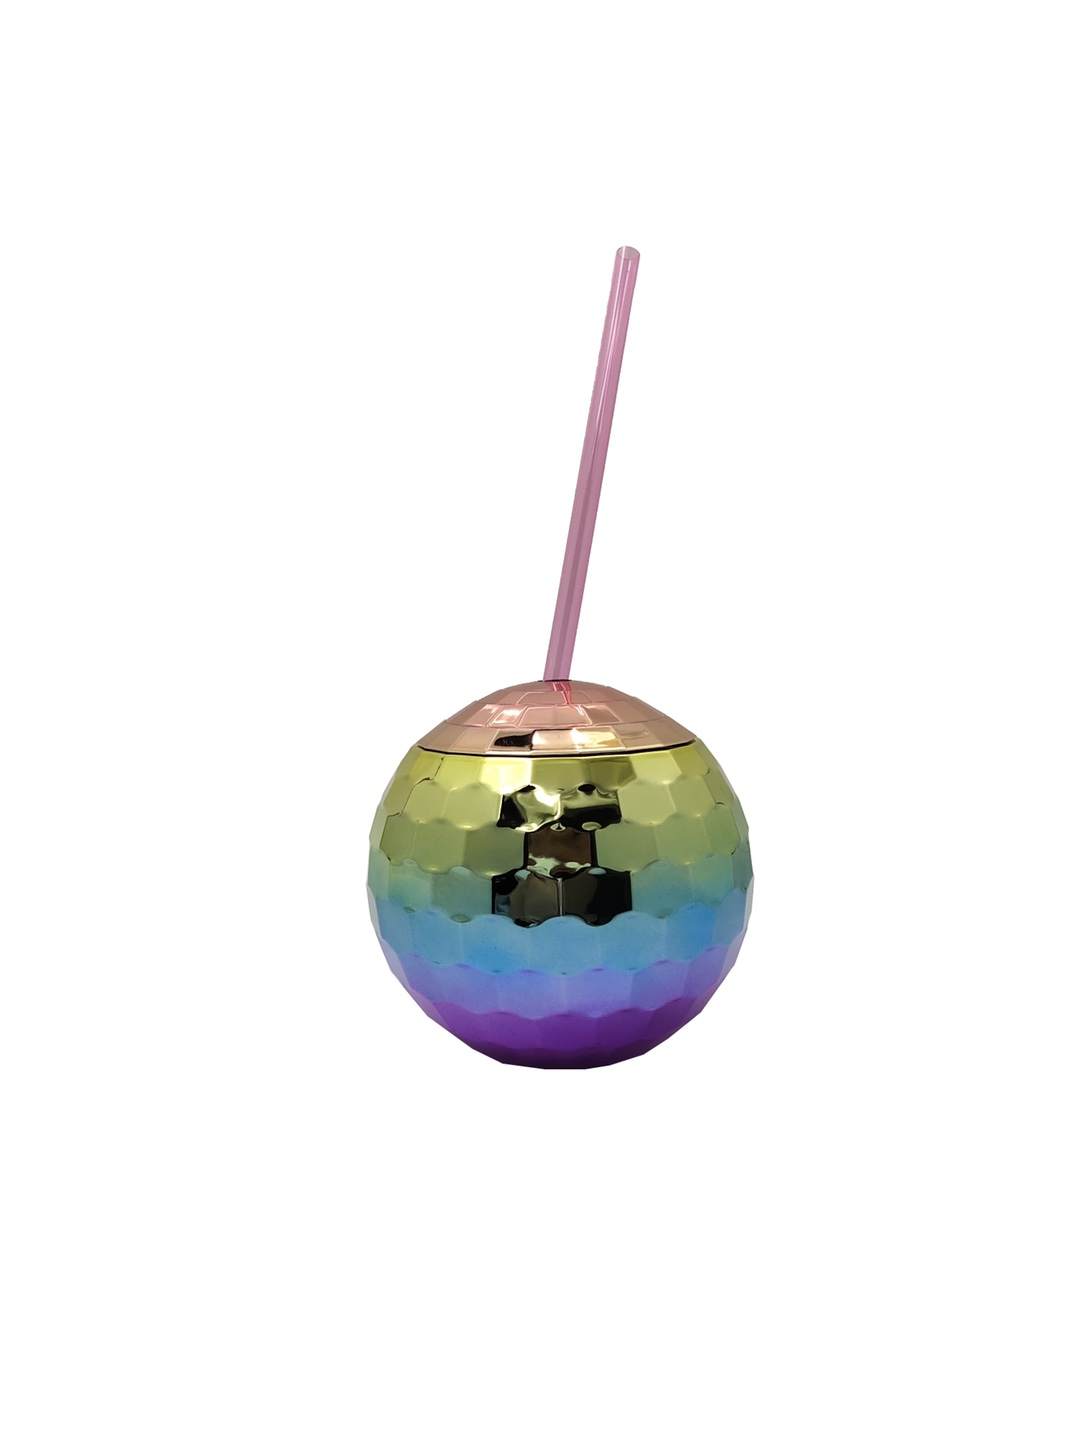 Bolaras Rainbow Disco Ball Cup with Name Tag